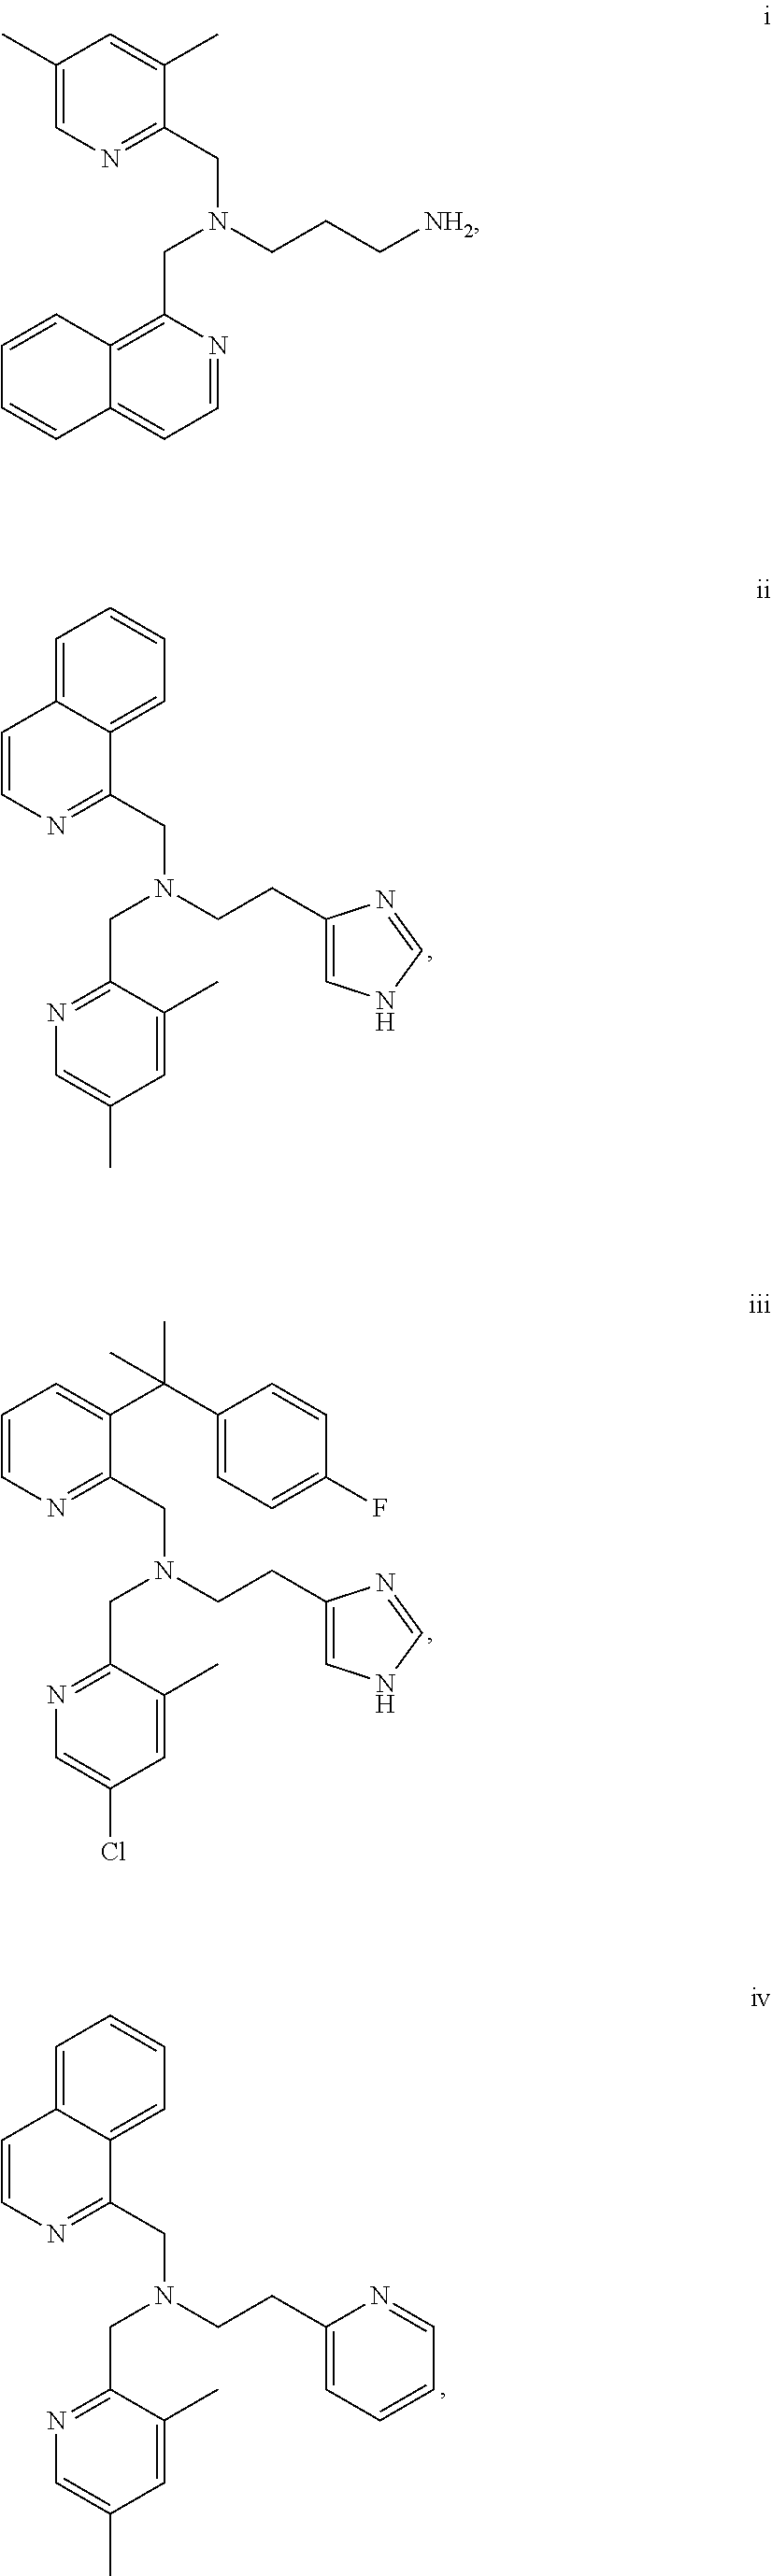 Acyclic cxcr4 inhibitors and uses thereof